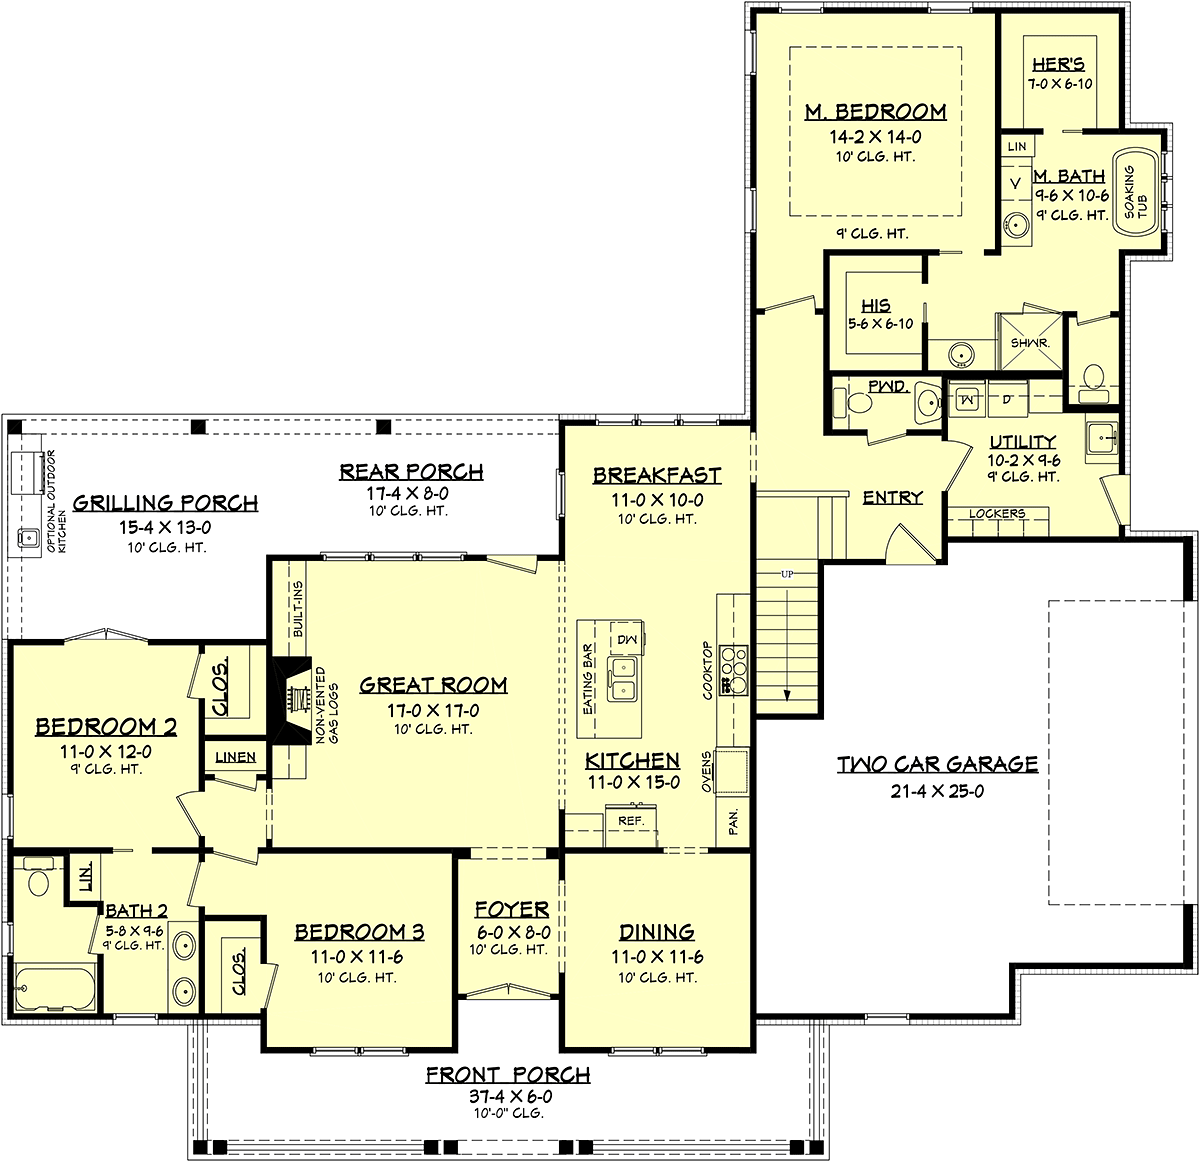 House Plan 56909 Alternate Level One